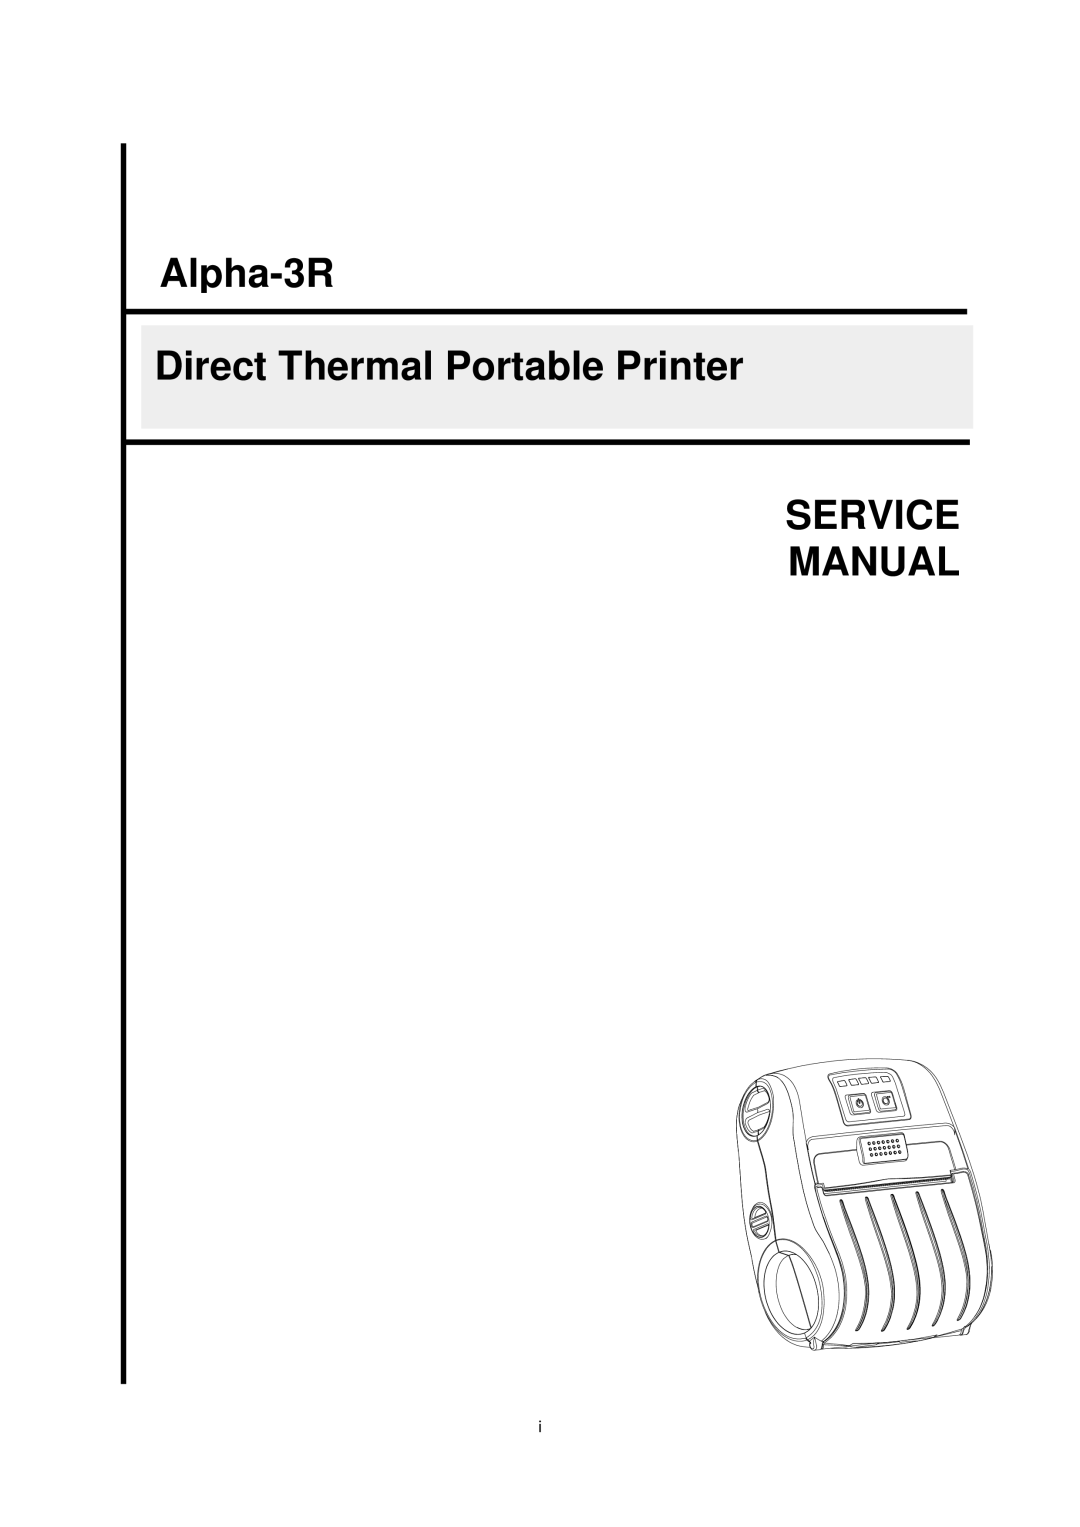 Alpha Vision Tech Alpha-3R service manual Direct Thermal Portable Printer, Service, Manual 